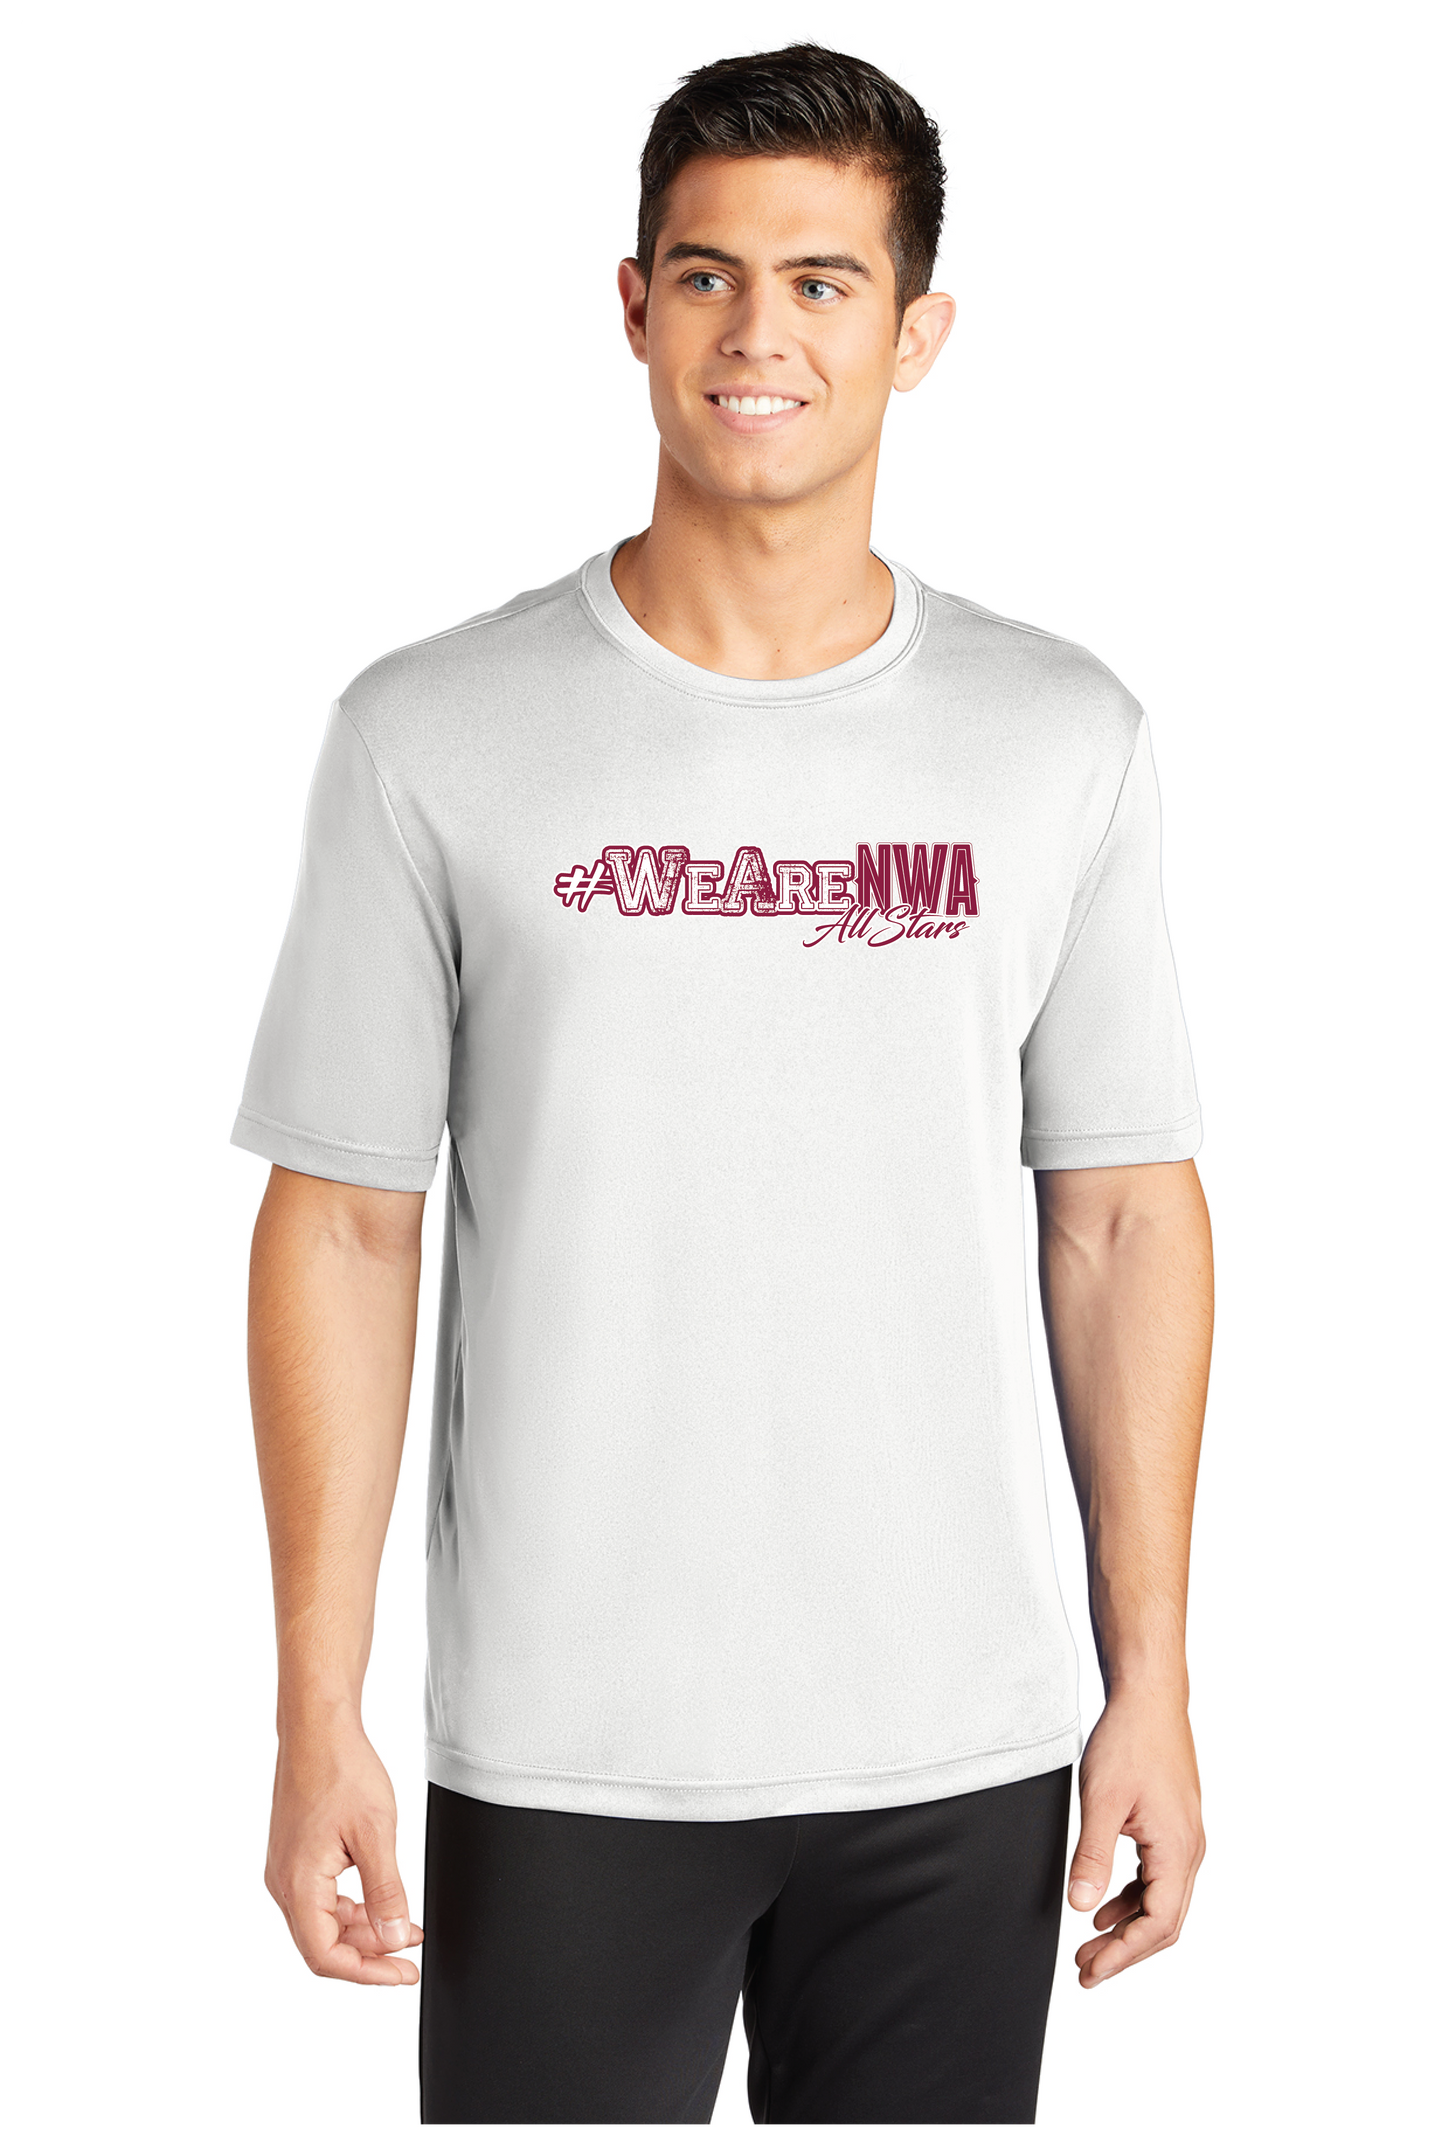 #WeAreNWA Allstars Moisture-Wicking T-Shirt